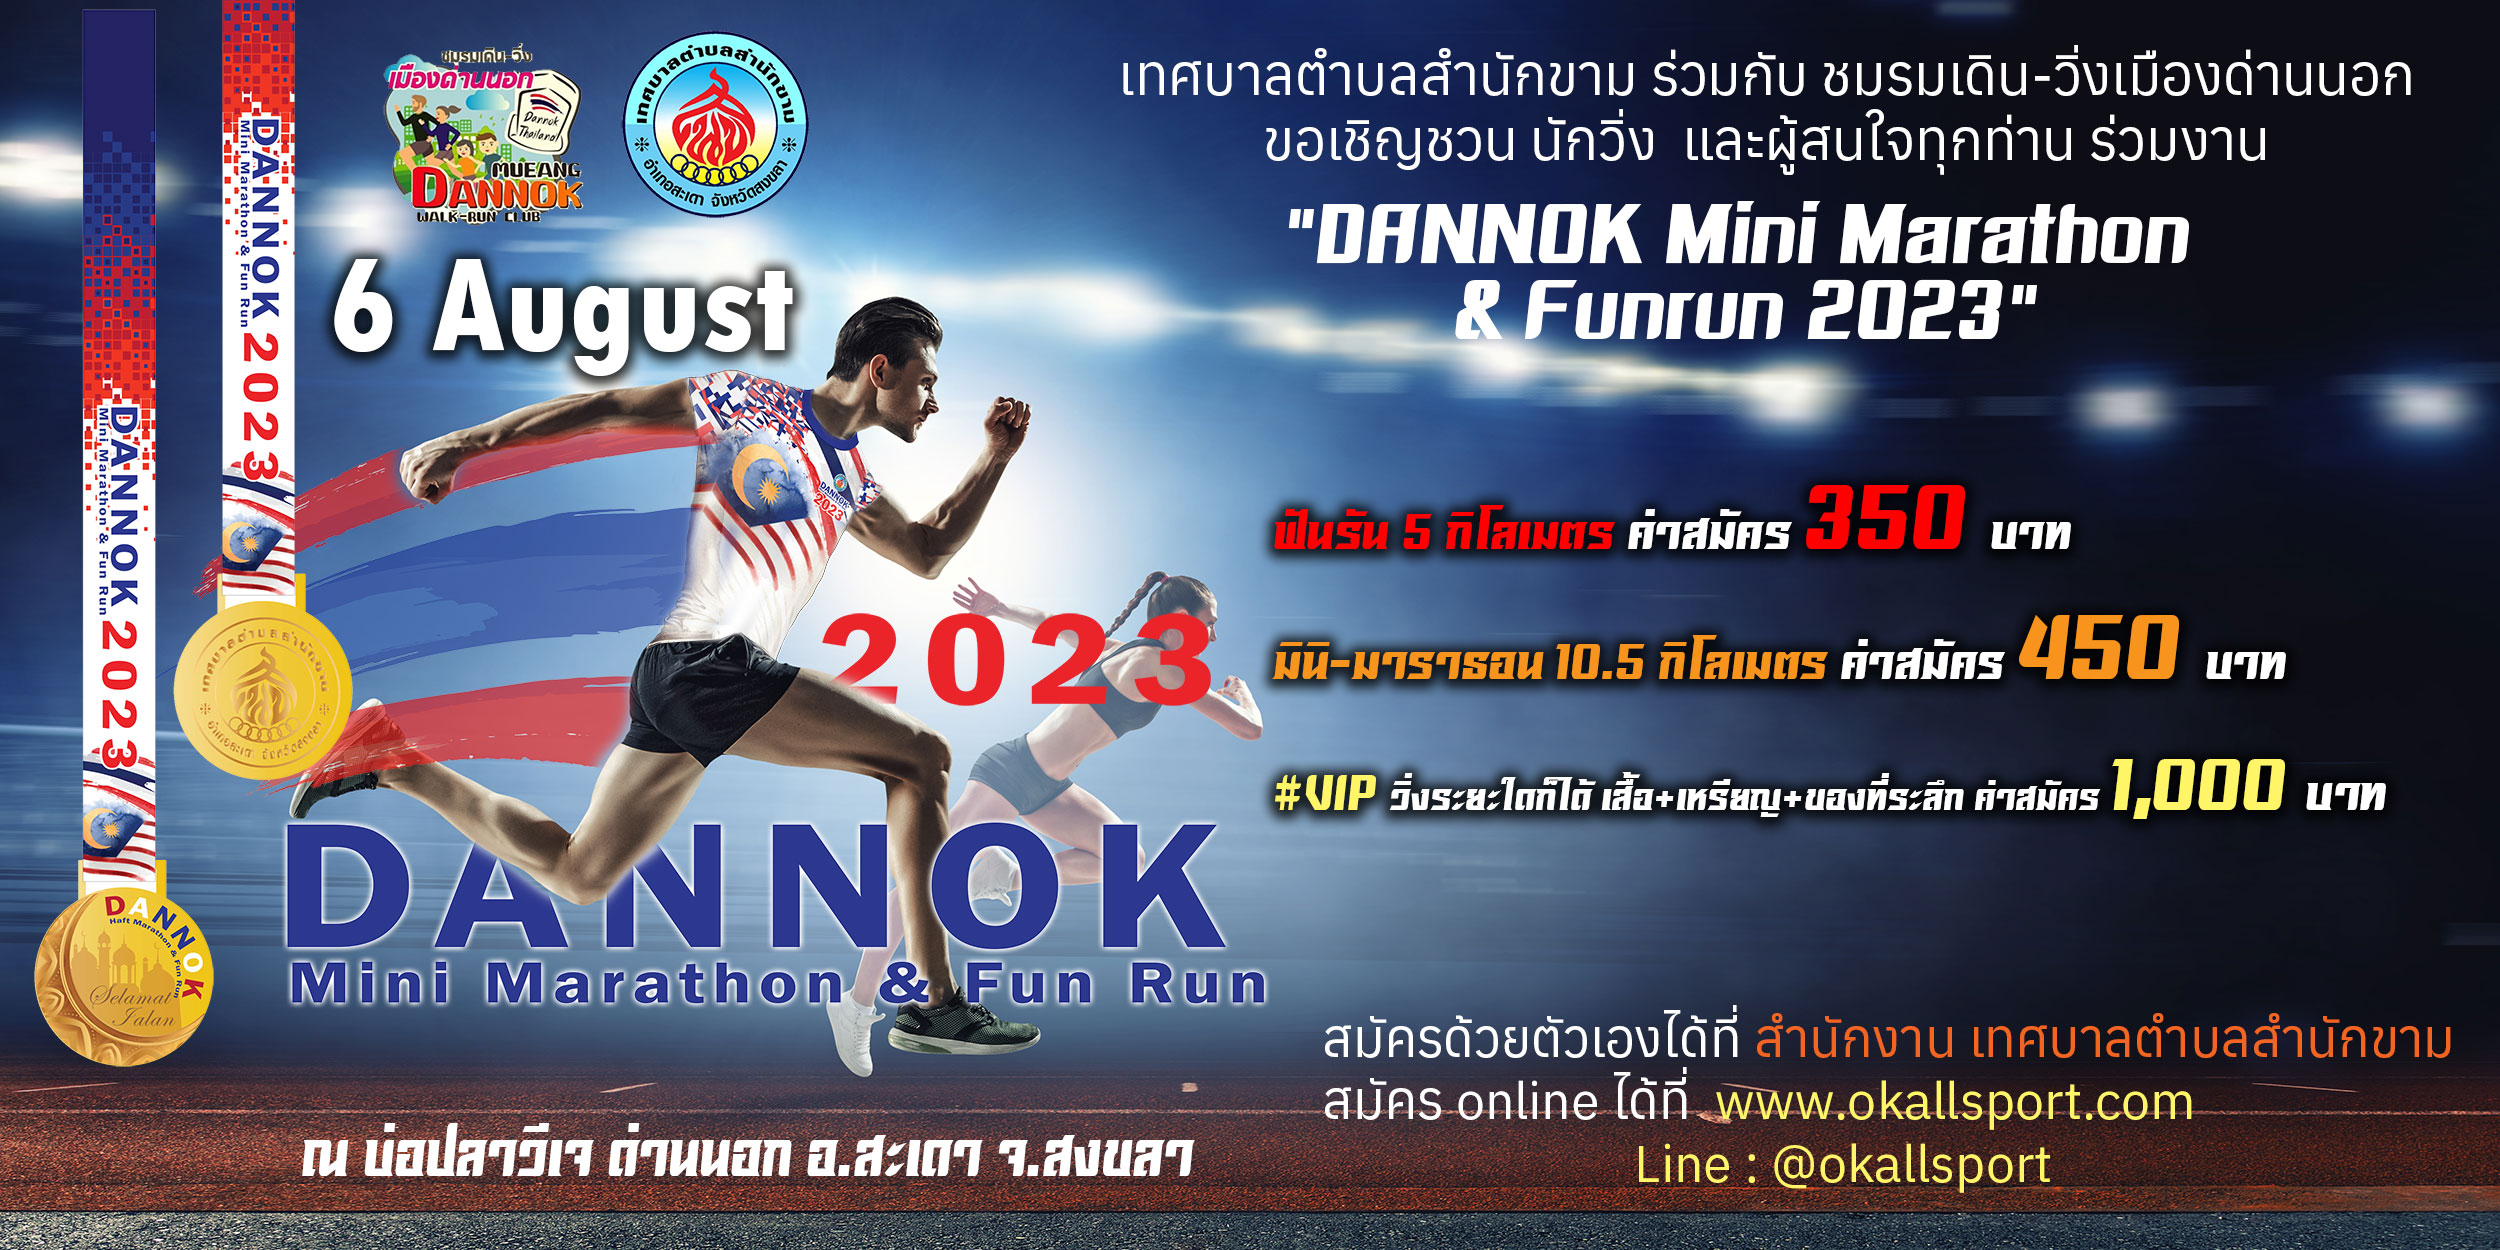 DANNOK Mini Marathon & Funrun 2023